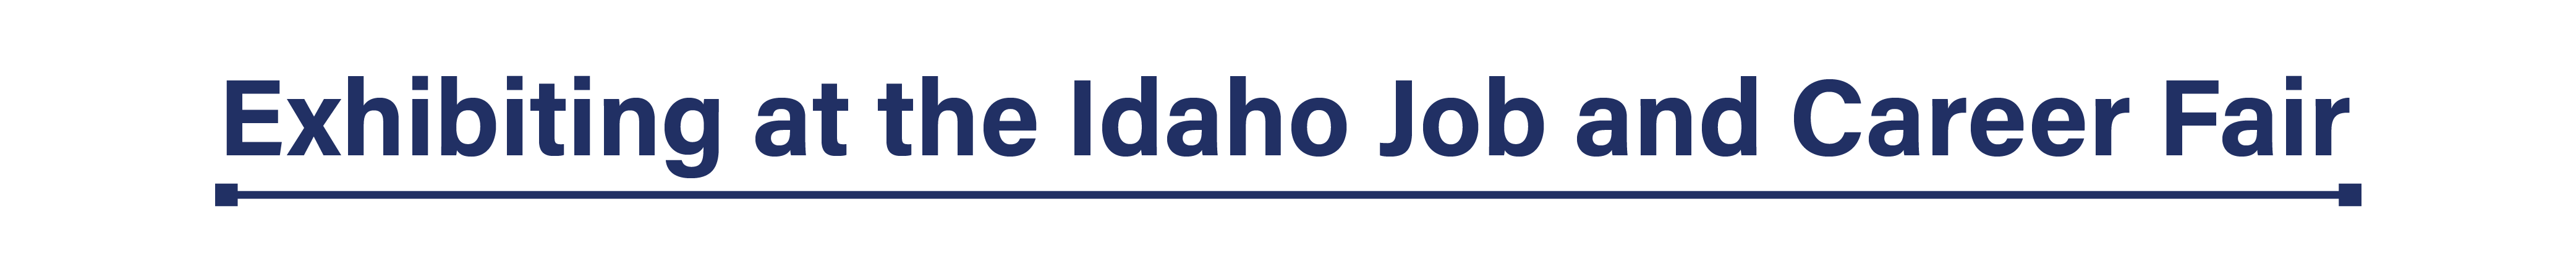 Why Exhibit at the Idaho Job & Career Fair